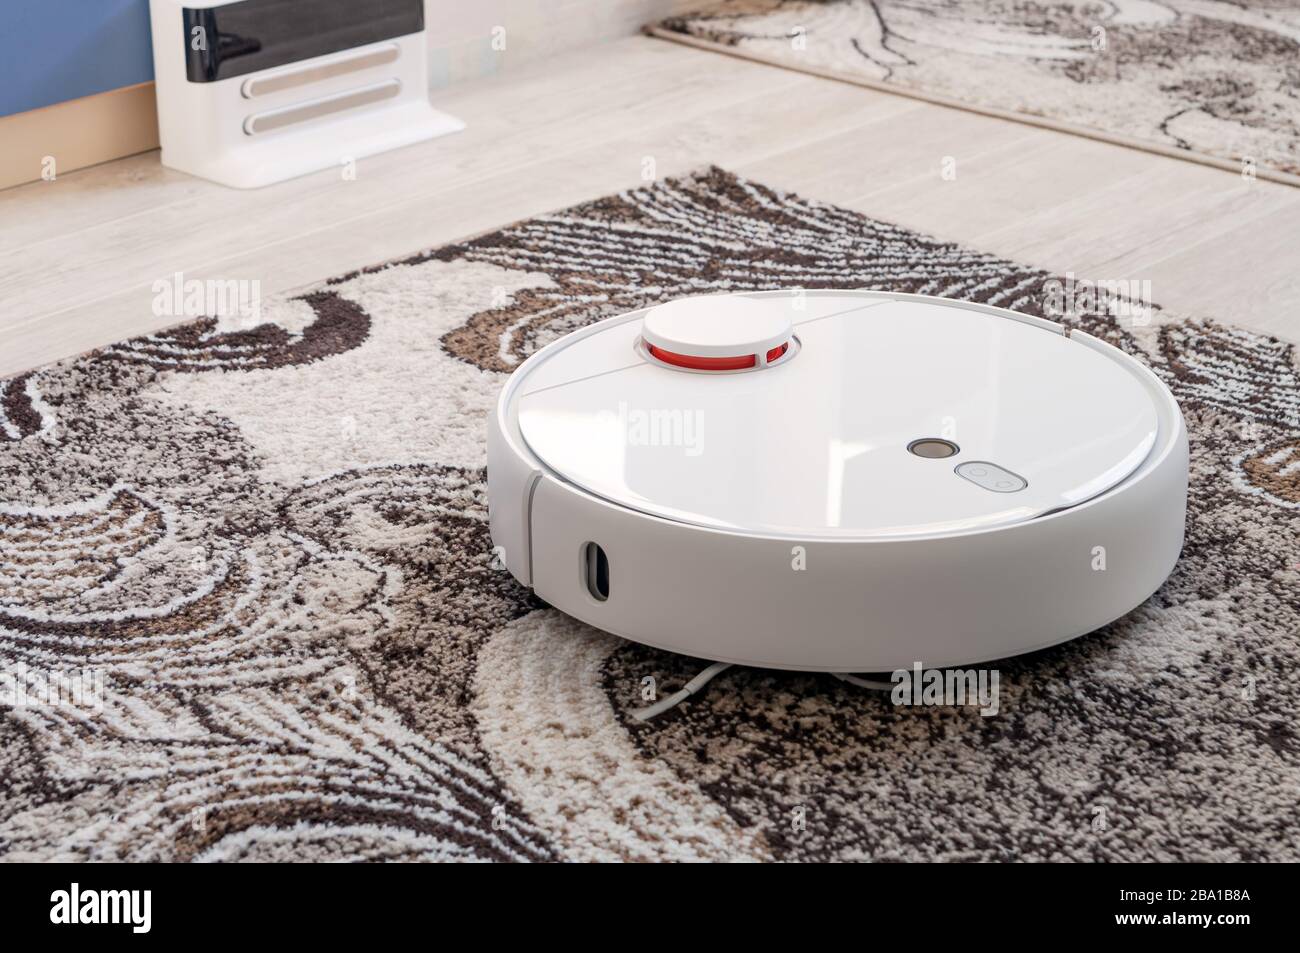 White round robotic vacuum cleaner on fitted carpet floor Stock Photo